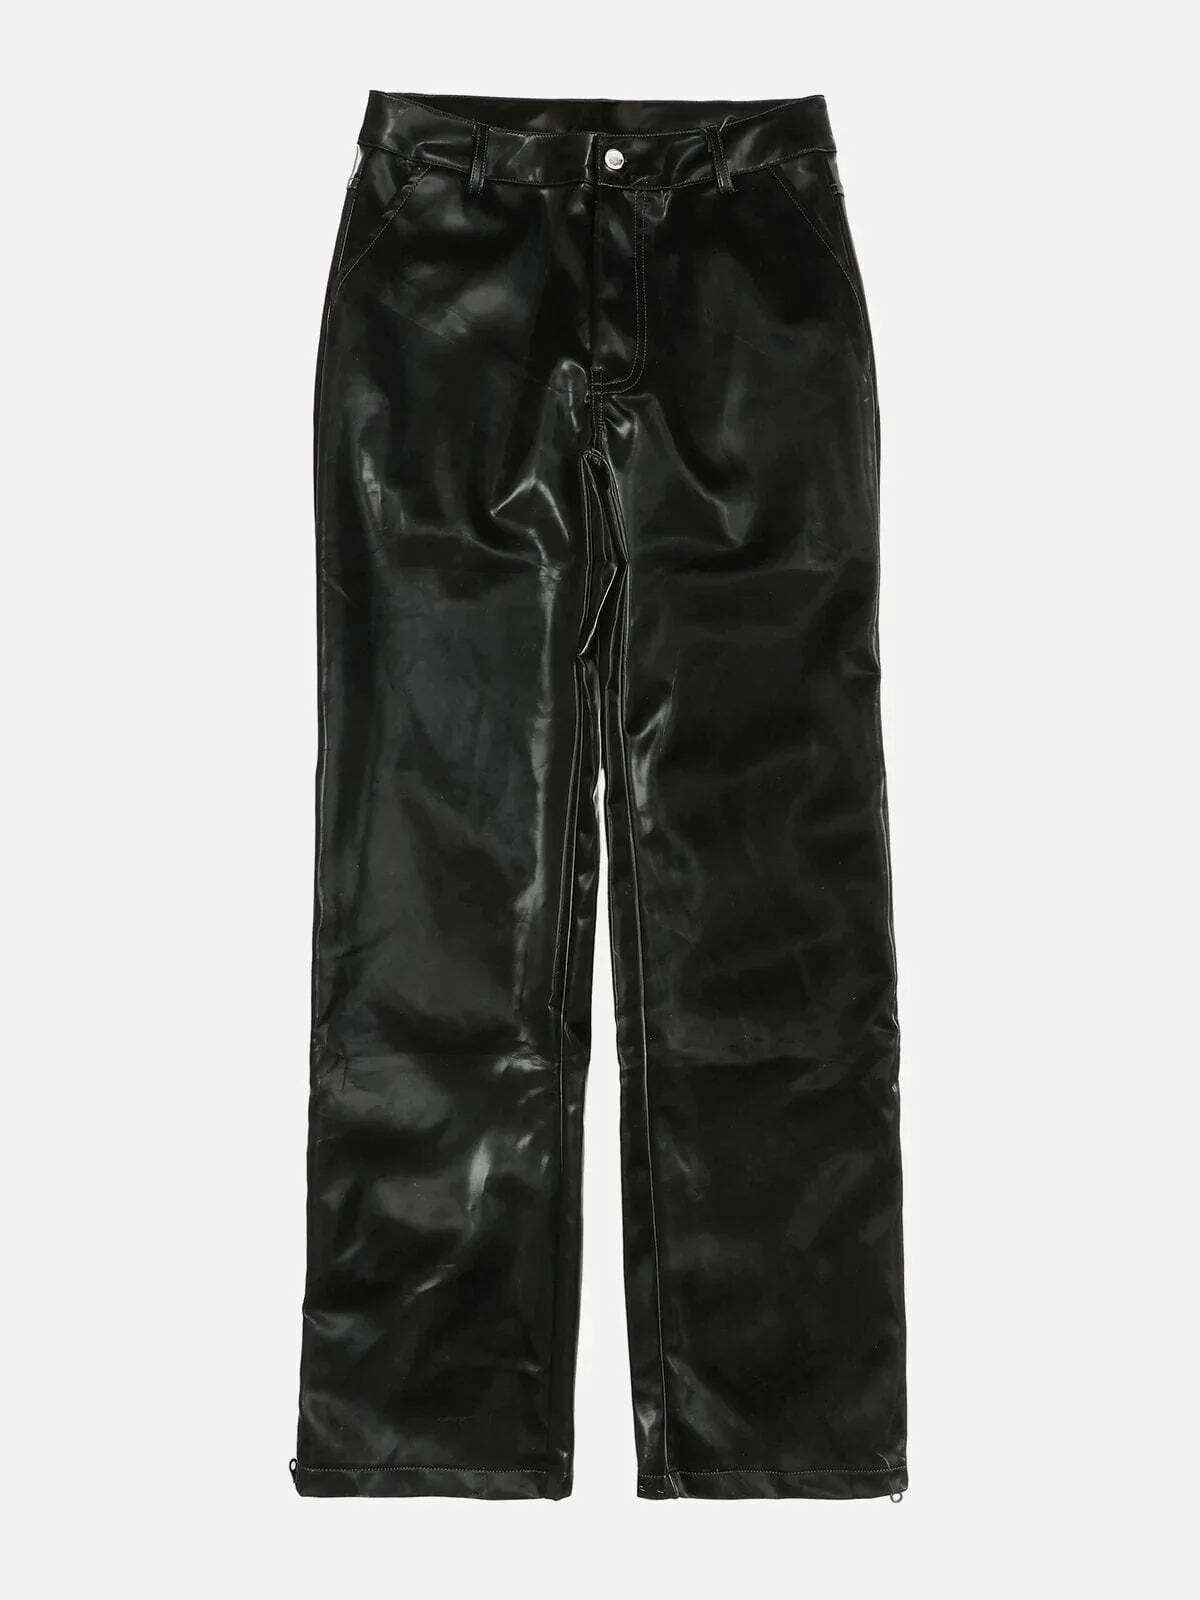 retro loosefit cargo pants urban streetwear essential 8068